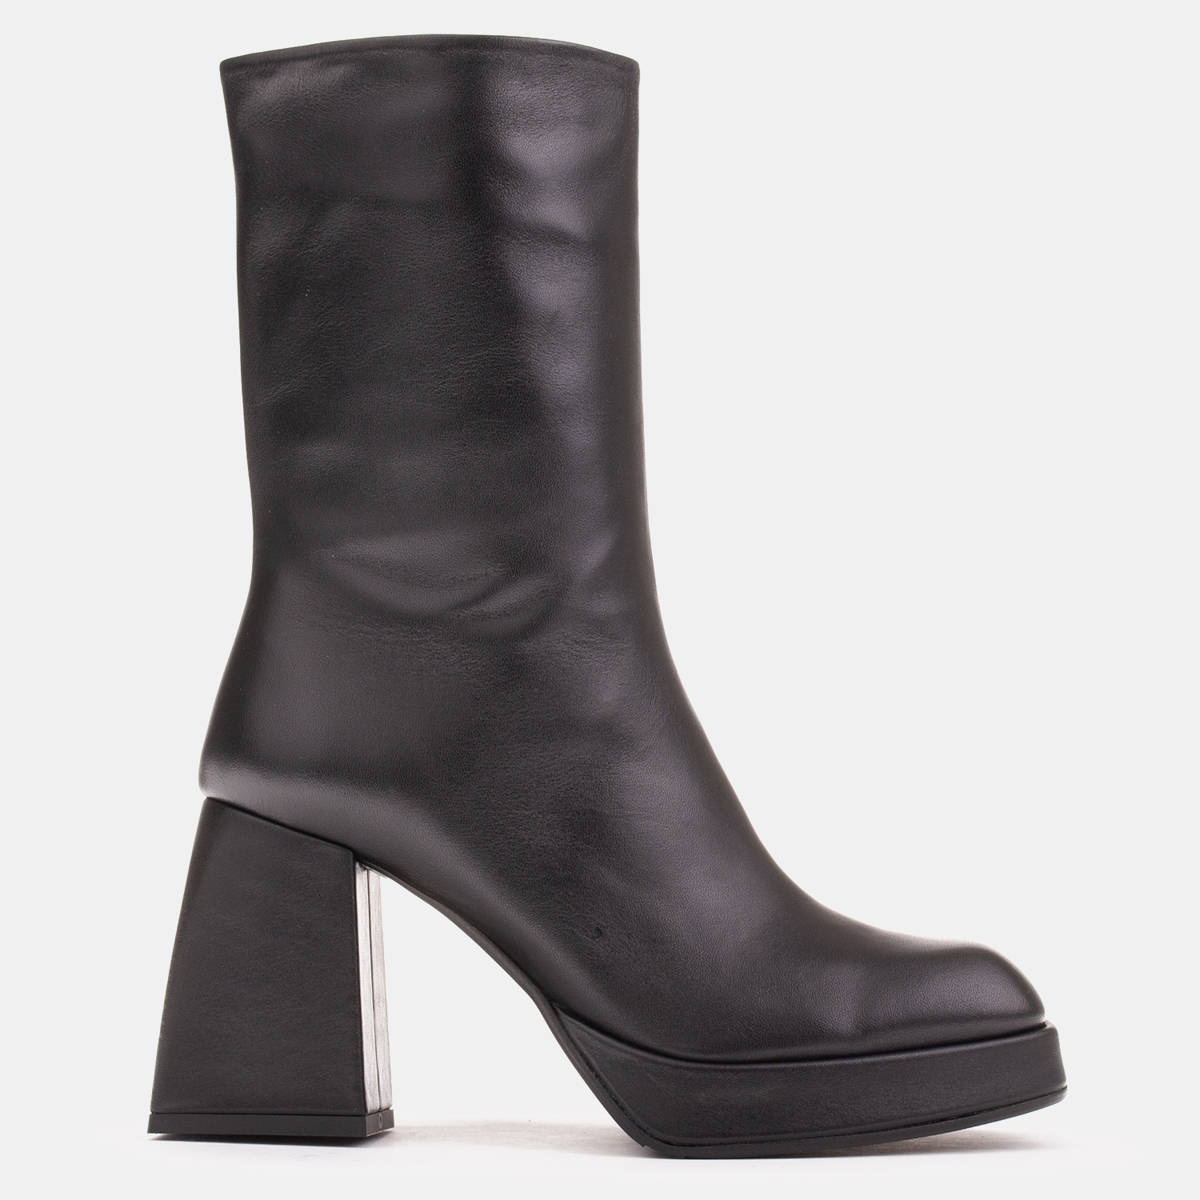 Rosalia boots on the platform - MarcoShoes.eu Online Shop